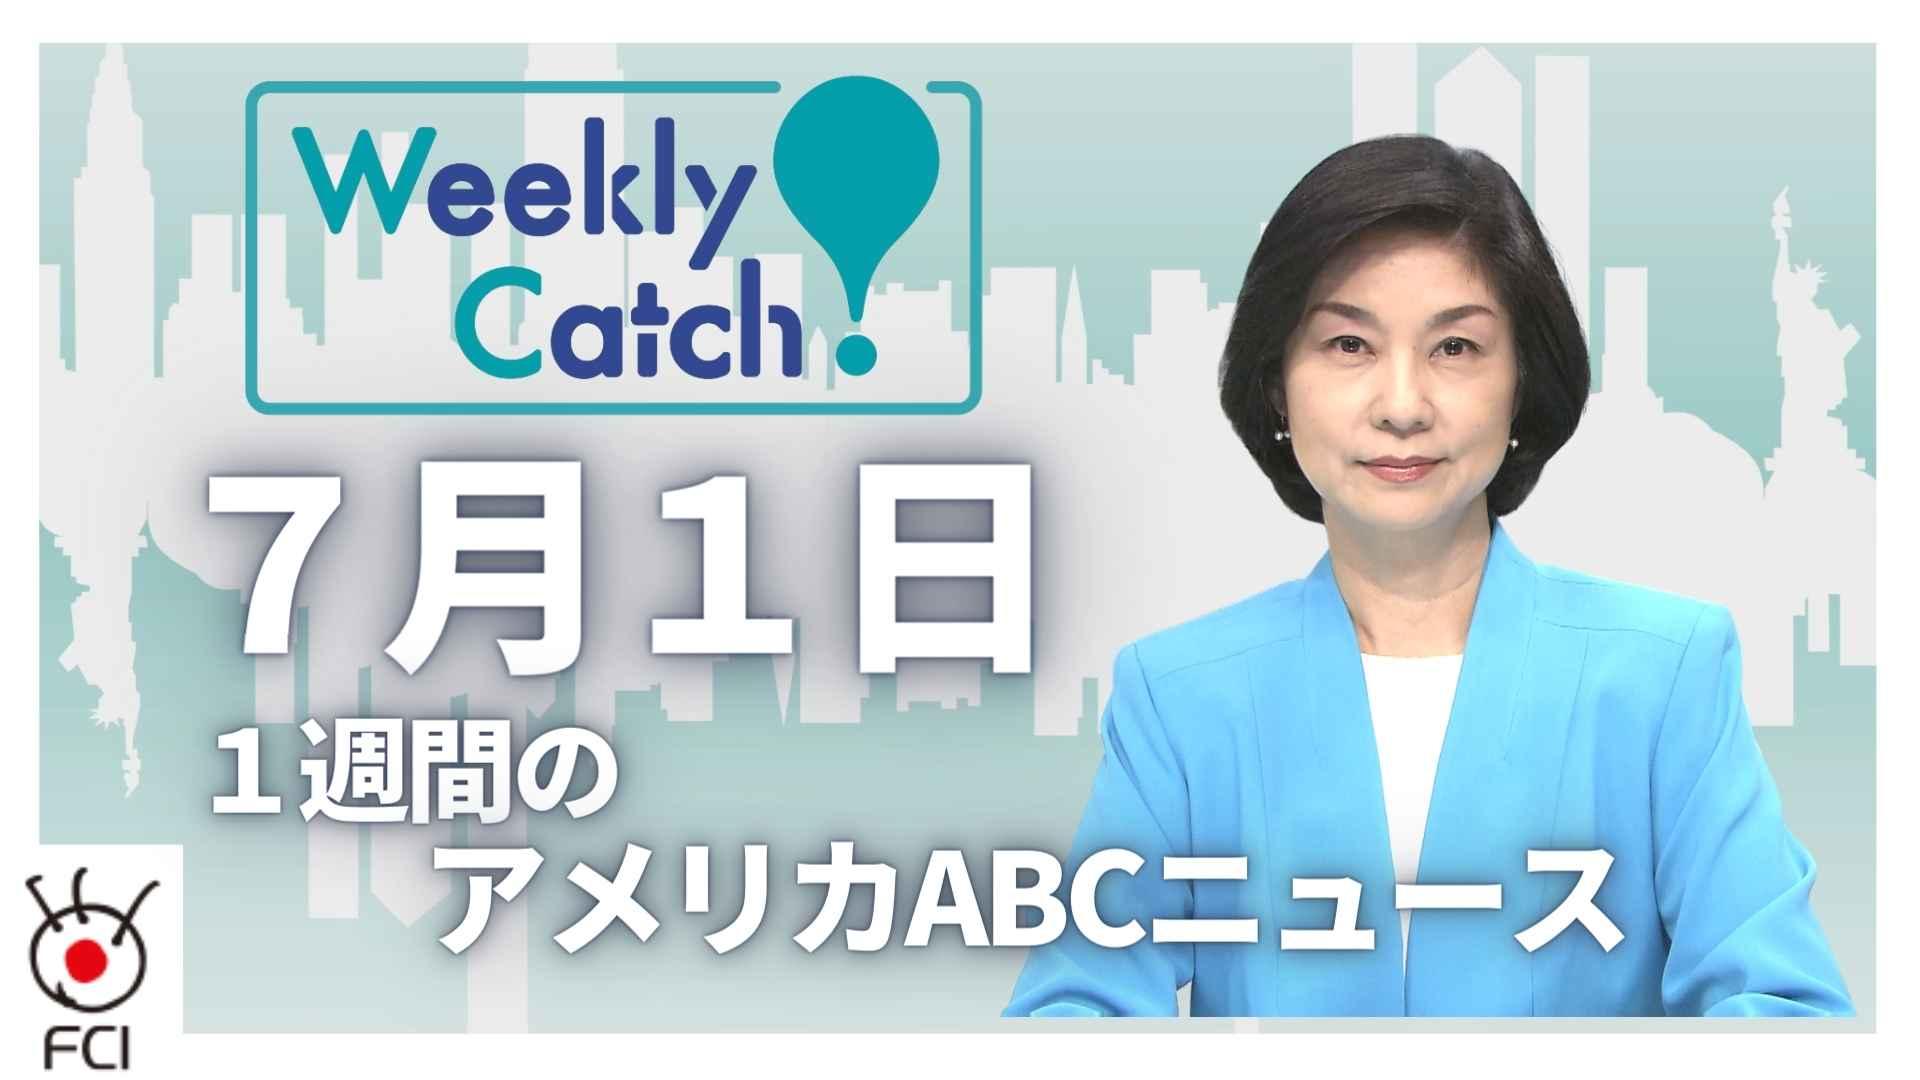 7月1 日 Weekly Catch!